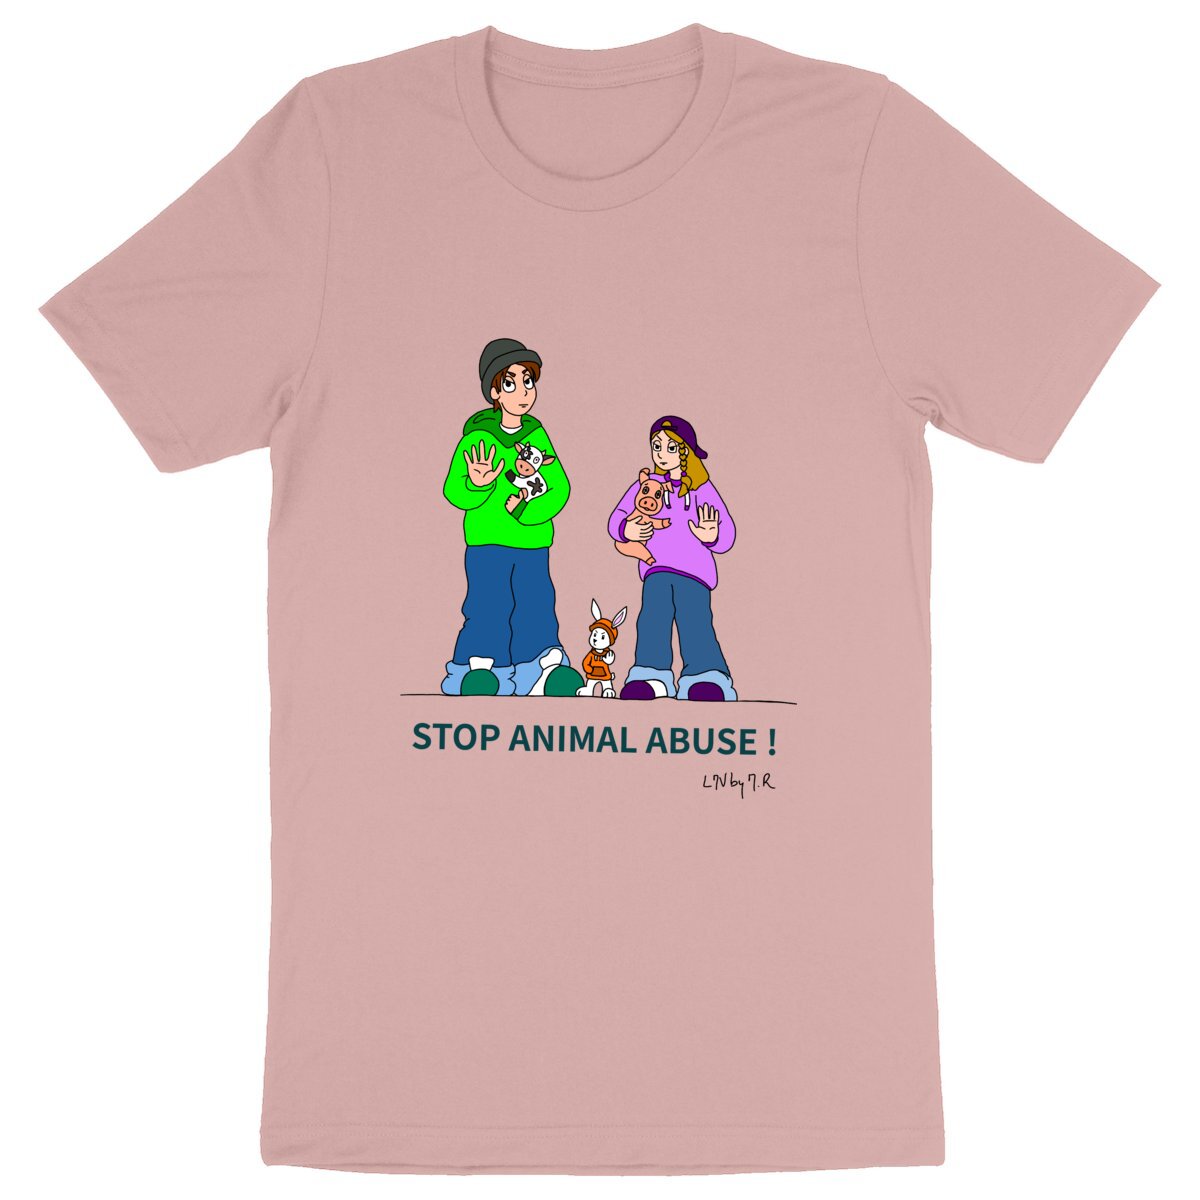 T-shirt HOMME/UNISEXE Bio LMV STOP ANIMAL ABUSE